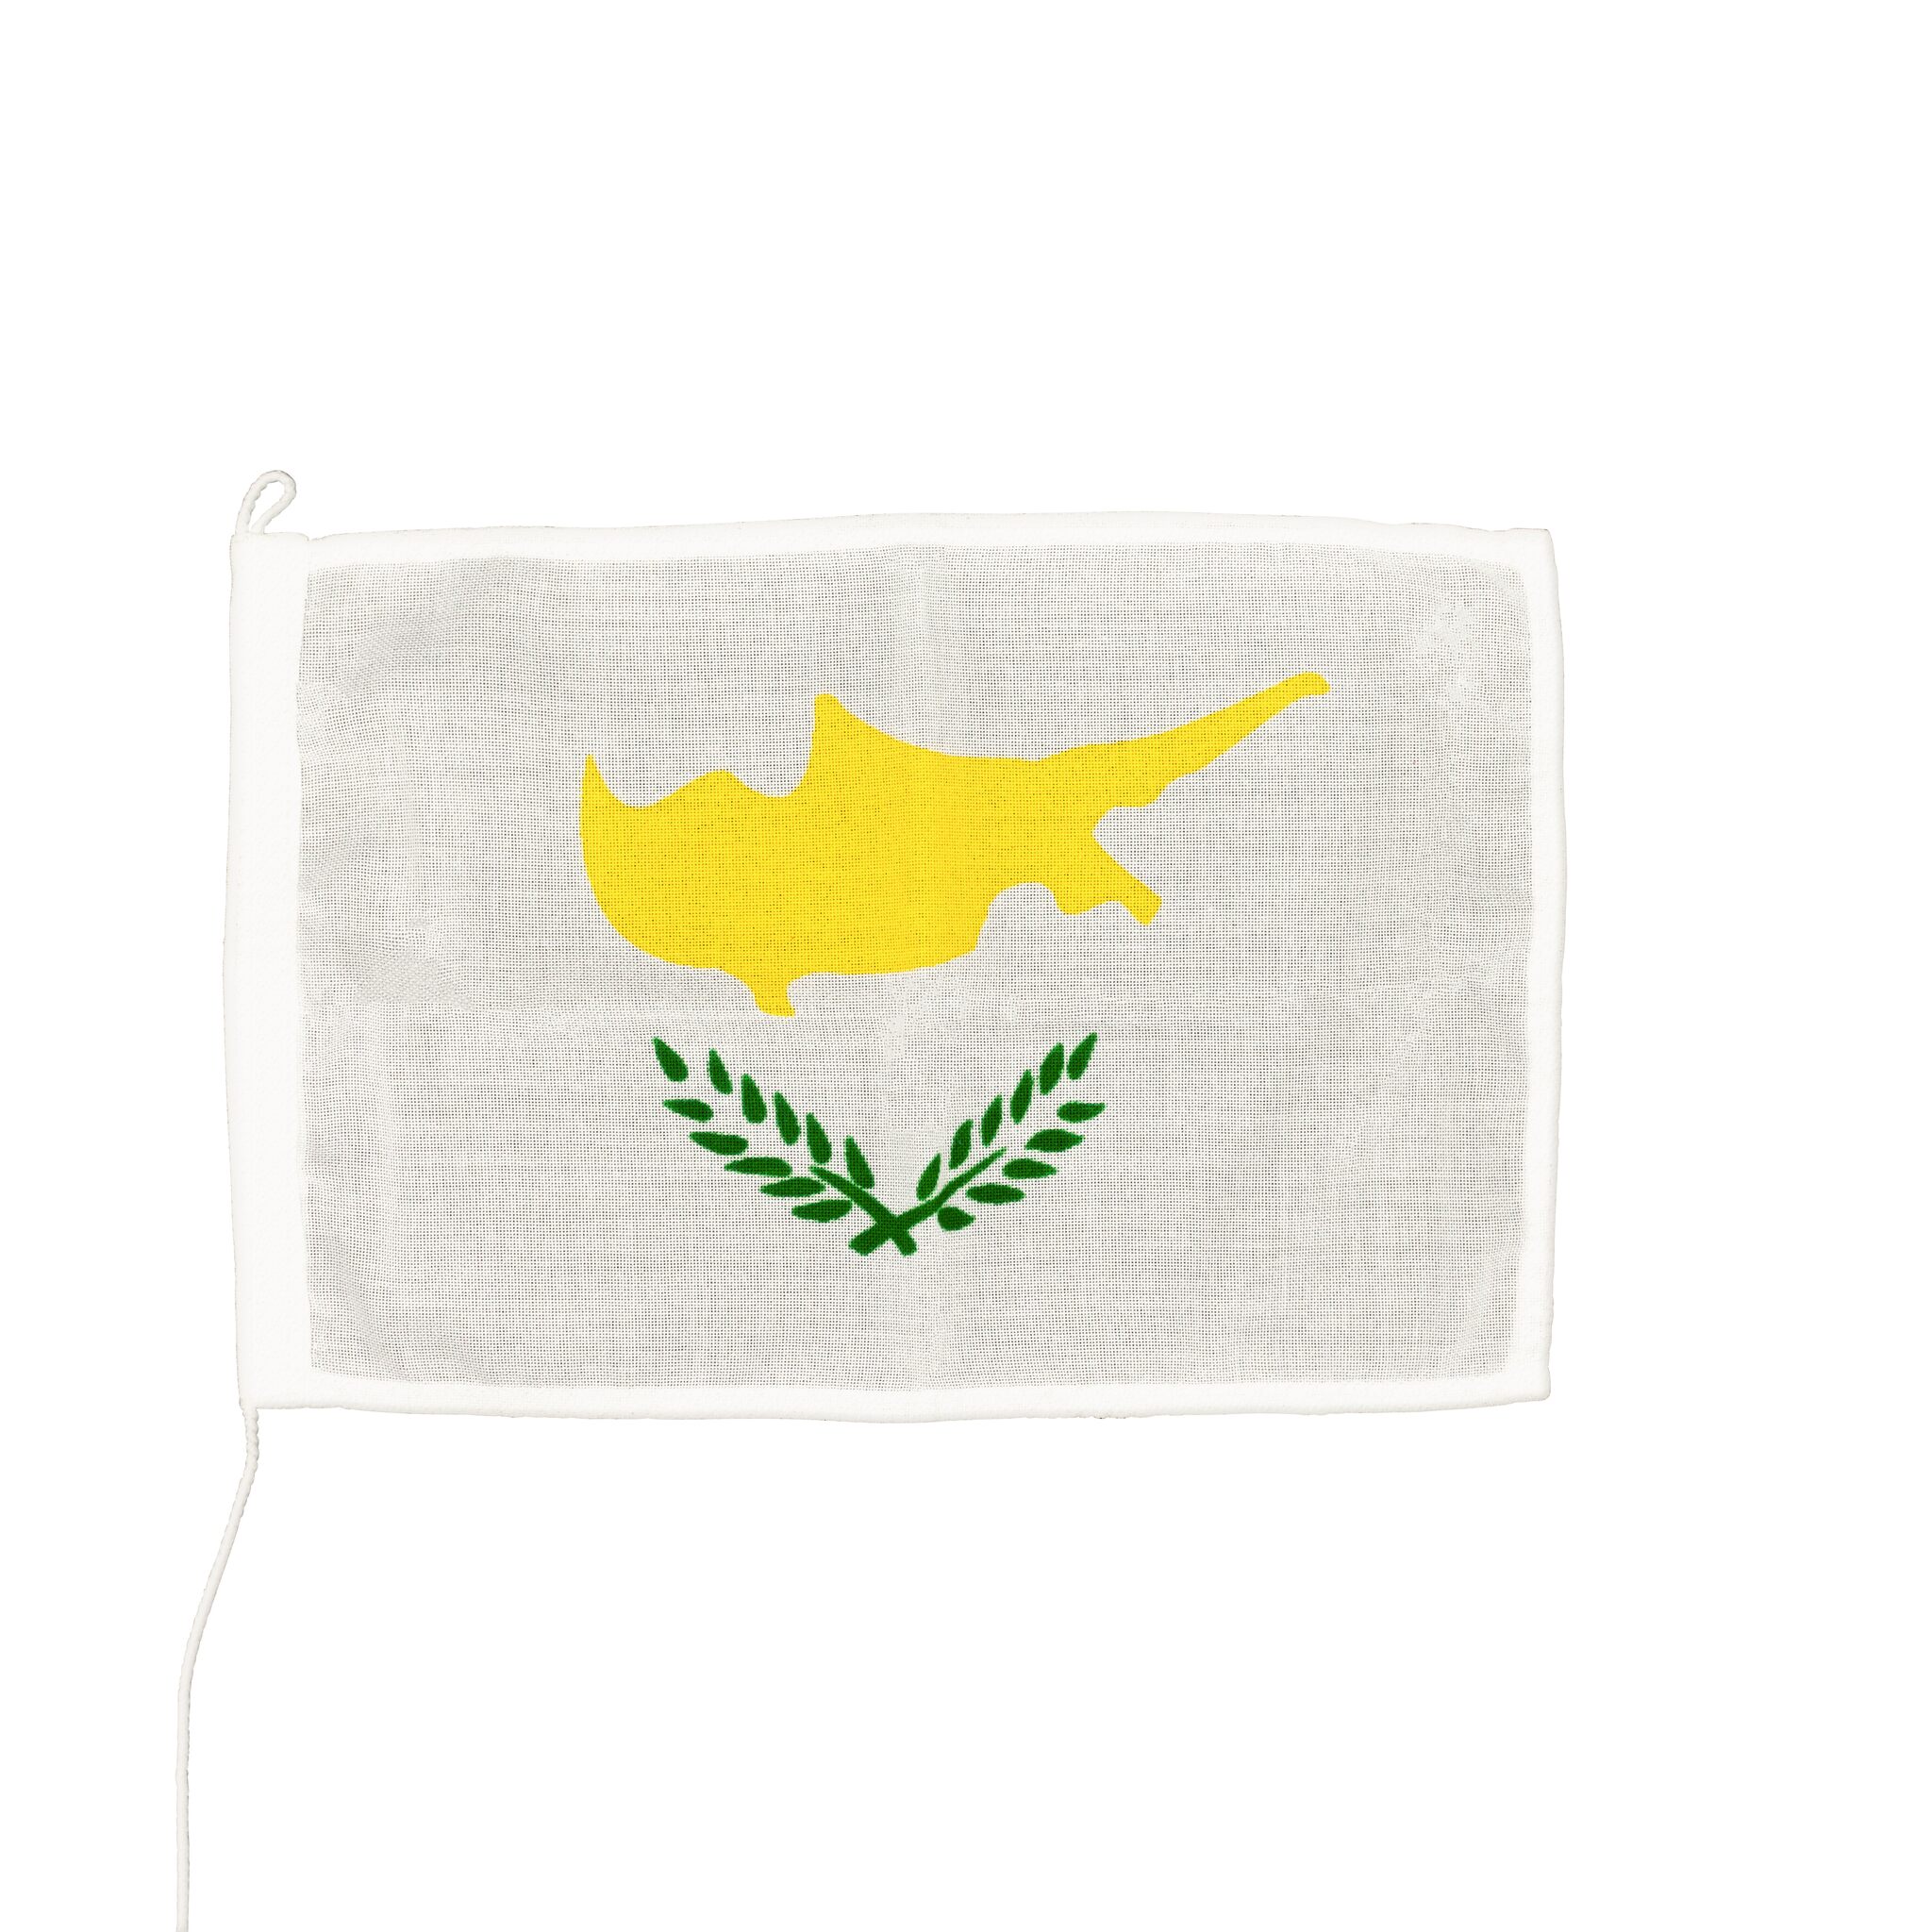 Gastlandflagge Zypern